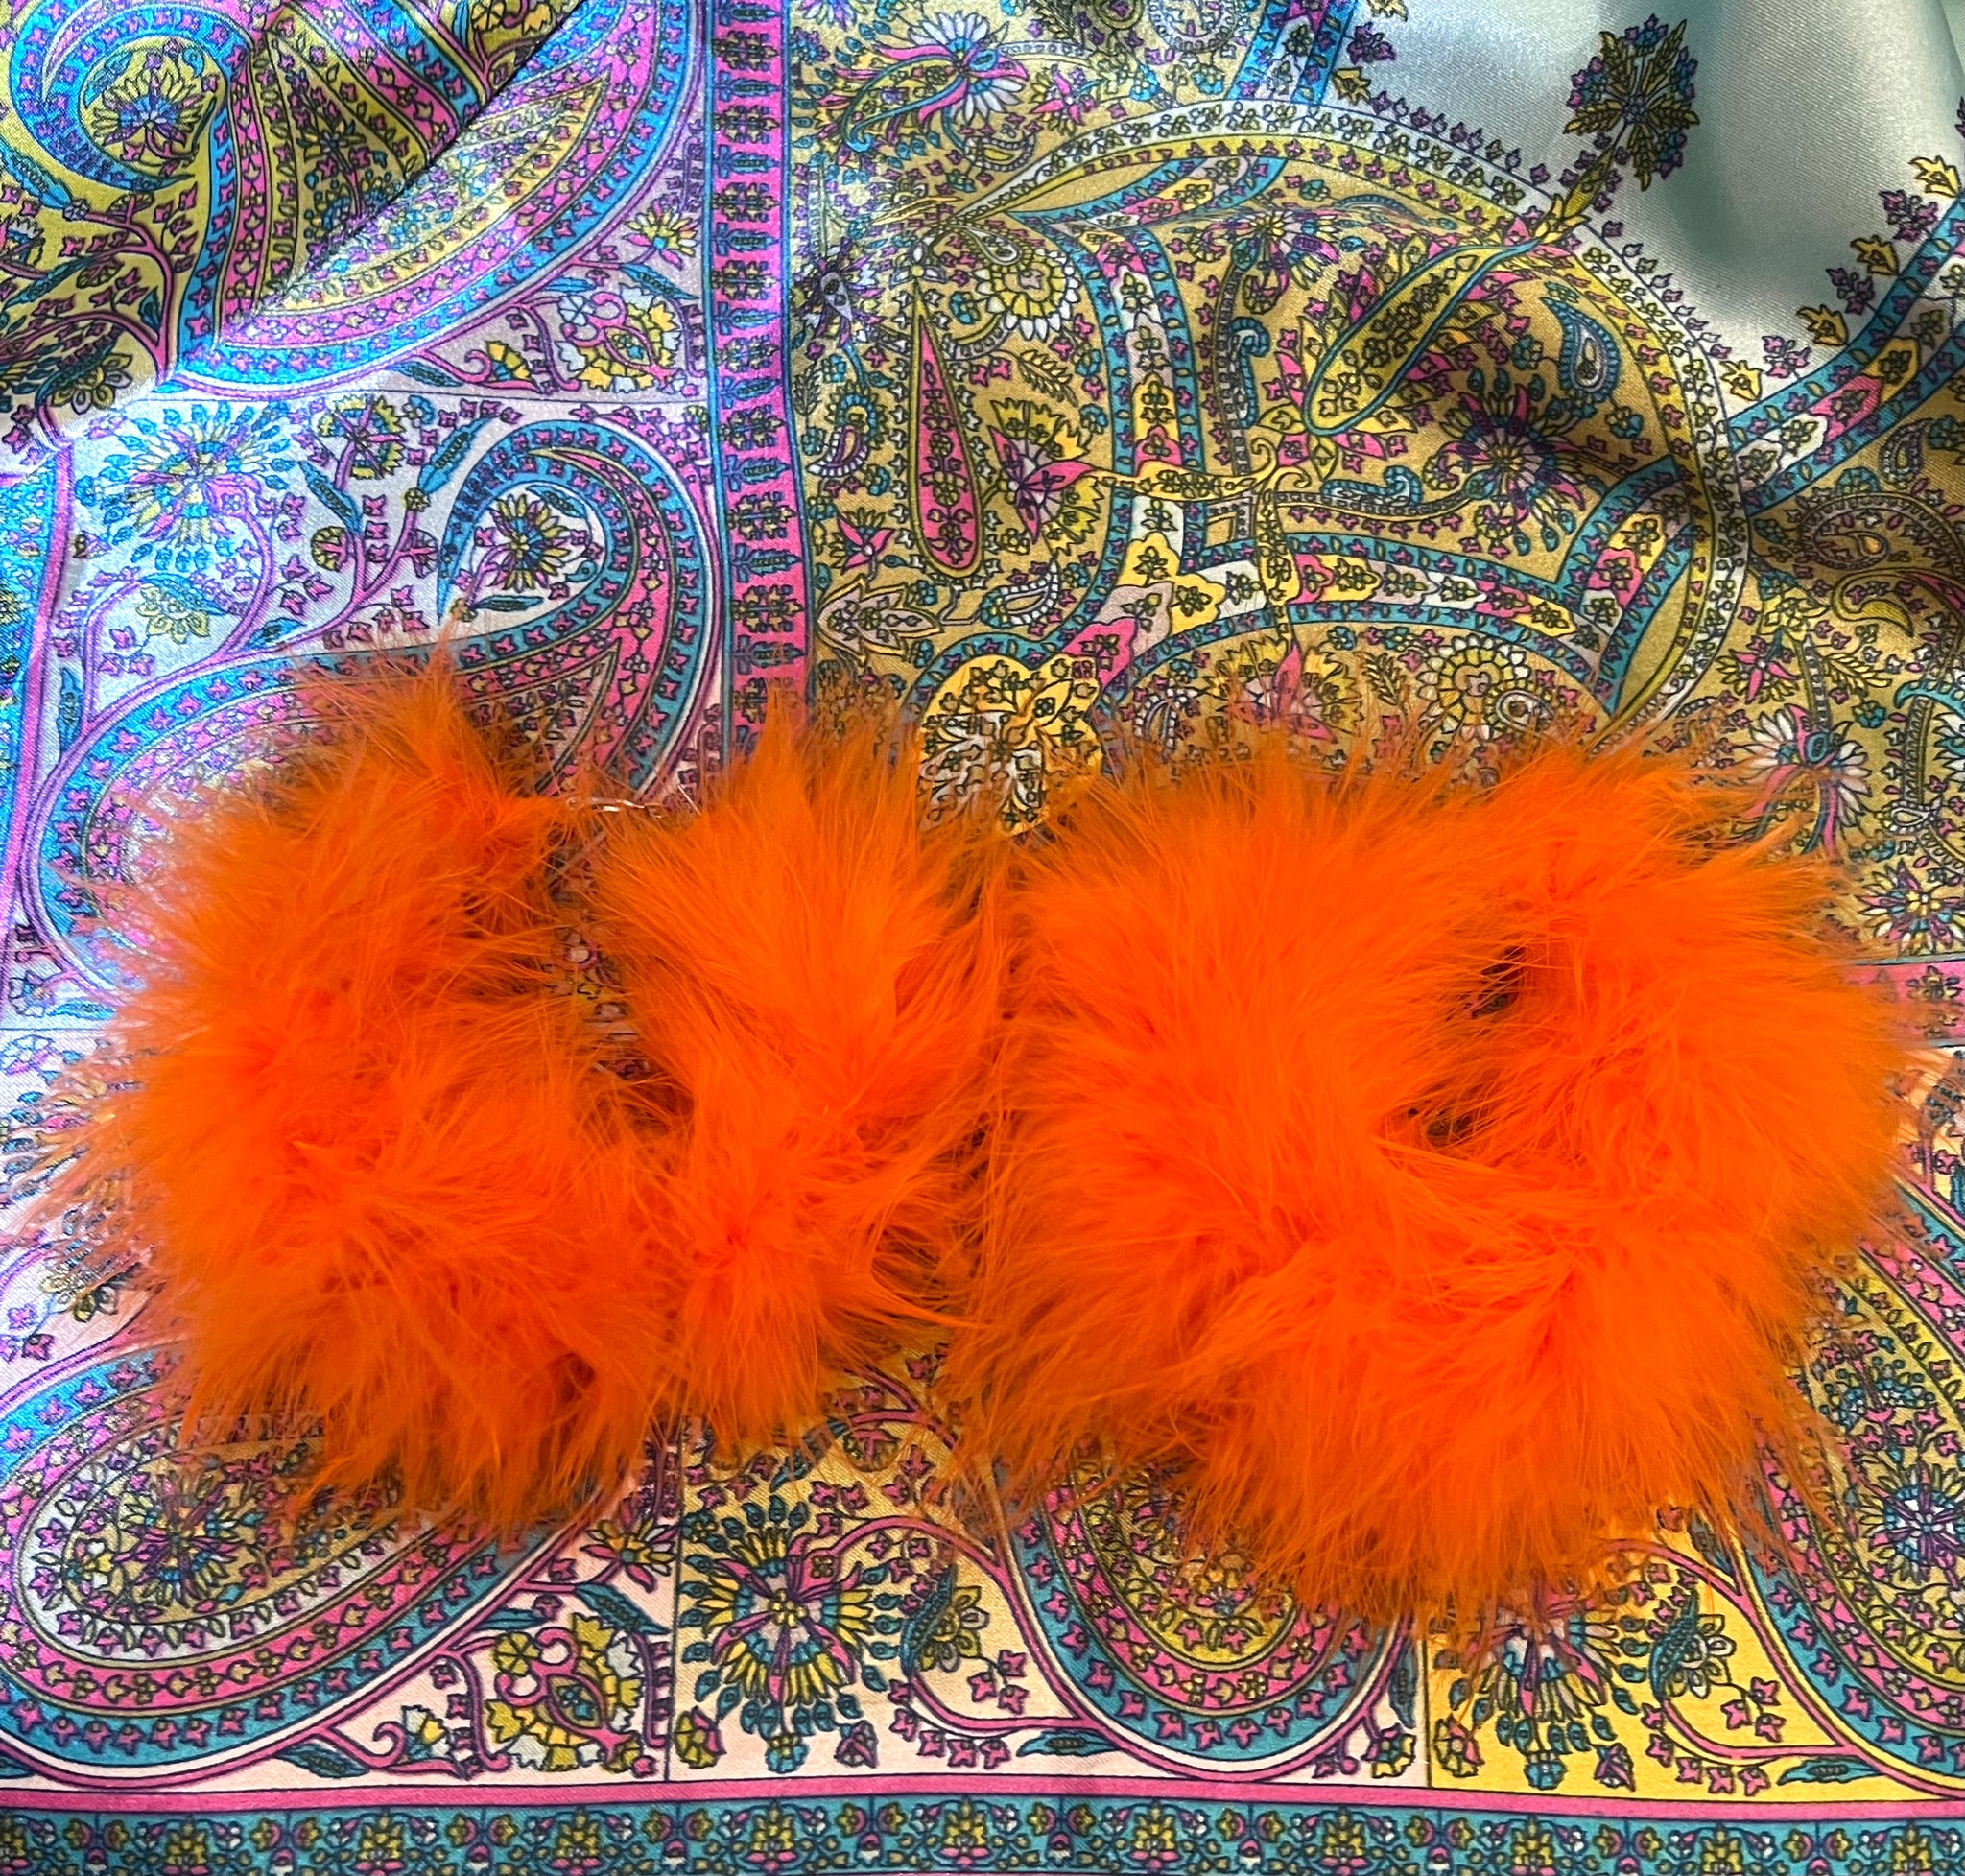 Orange Feathers